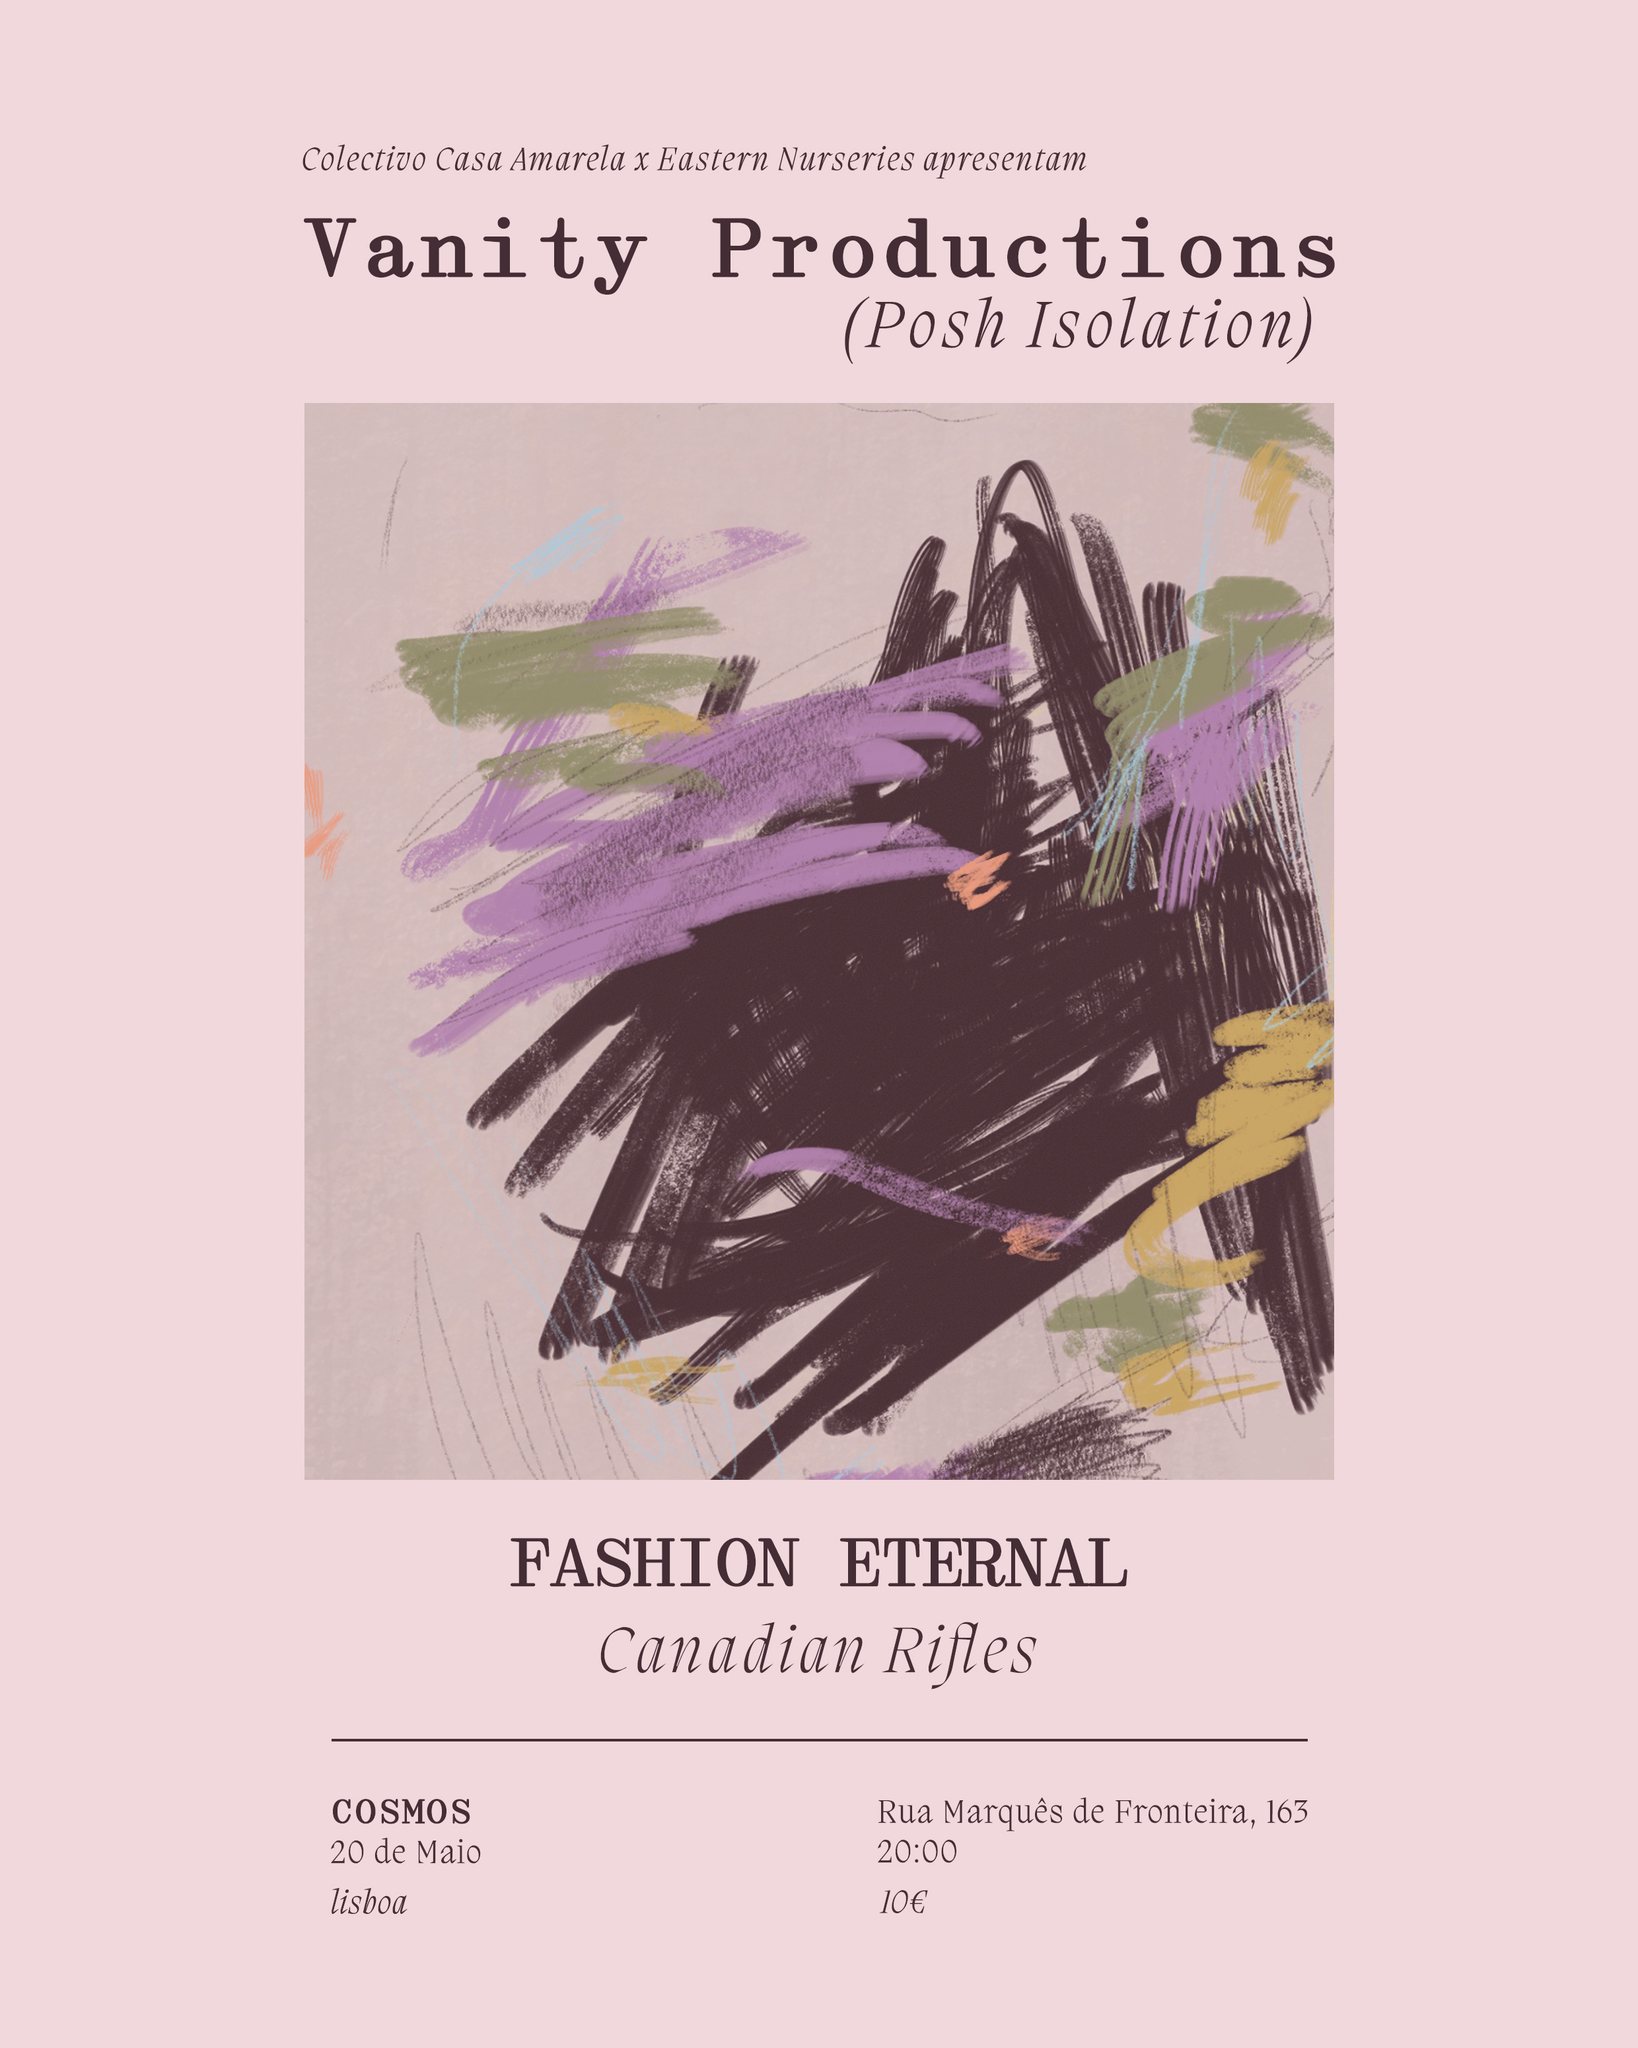 Colectivo Casa Amarela x Eastern Nurseries w/ Vanity Productions + Fashion Eternal + Canadian Rifles